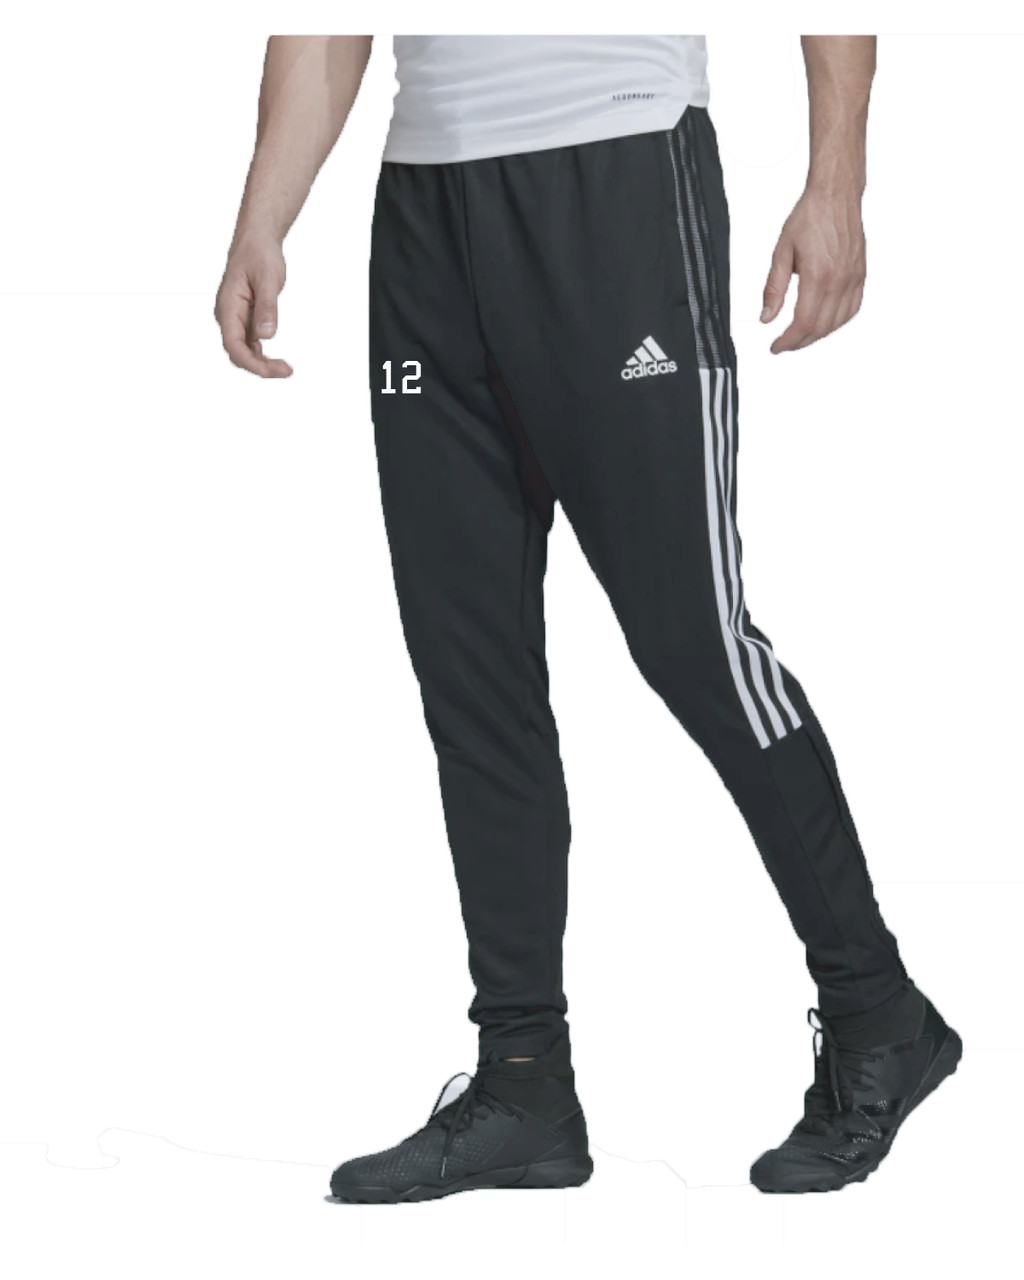 adidas Men's Standard Tiro 21 Track Pants, Black/Team Royal Blue, 3X-Large  : Amazon.in: Clothing & Accessories